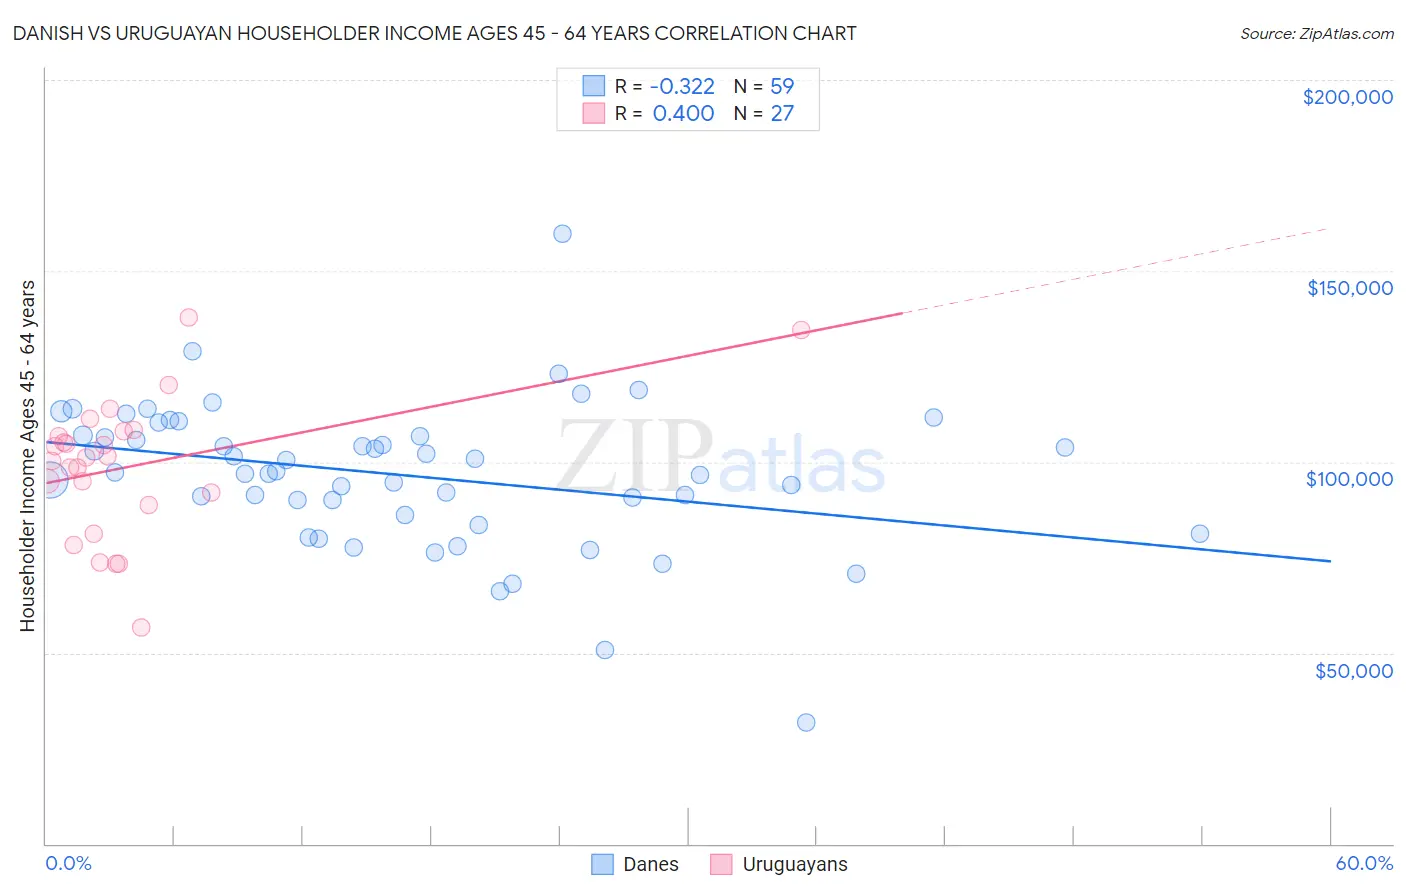 Danish vs Uruguayan Householder Income Ages 45 - 64 years